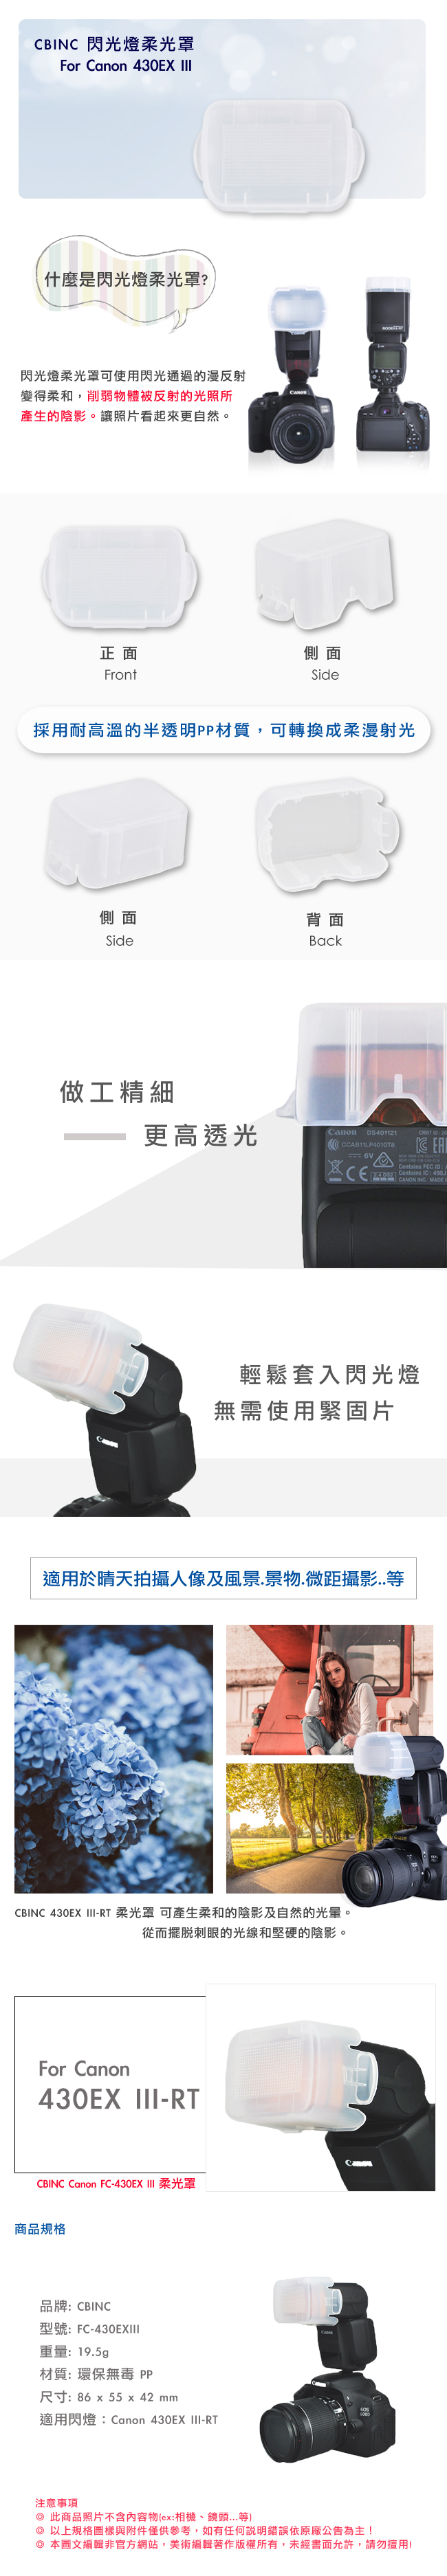 CBINC 閃光燈柔光罩 For Canon 430EX III 閃燈